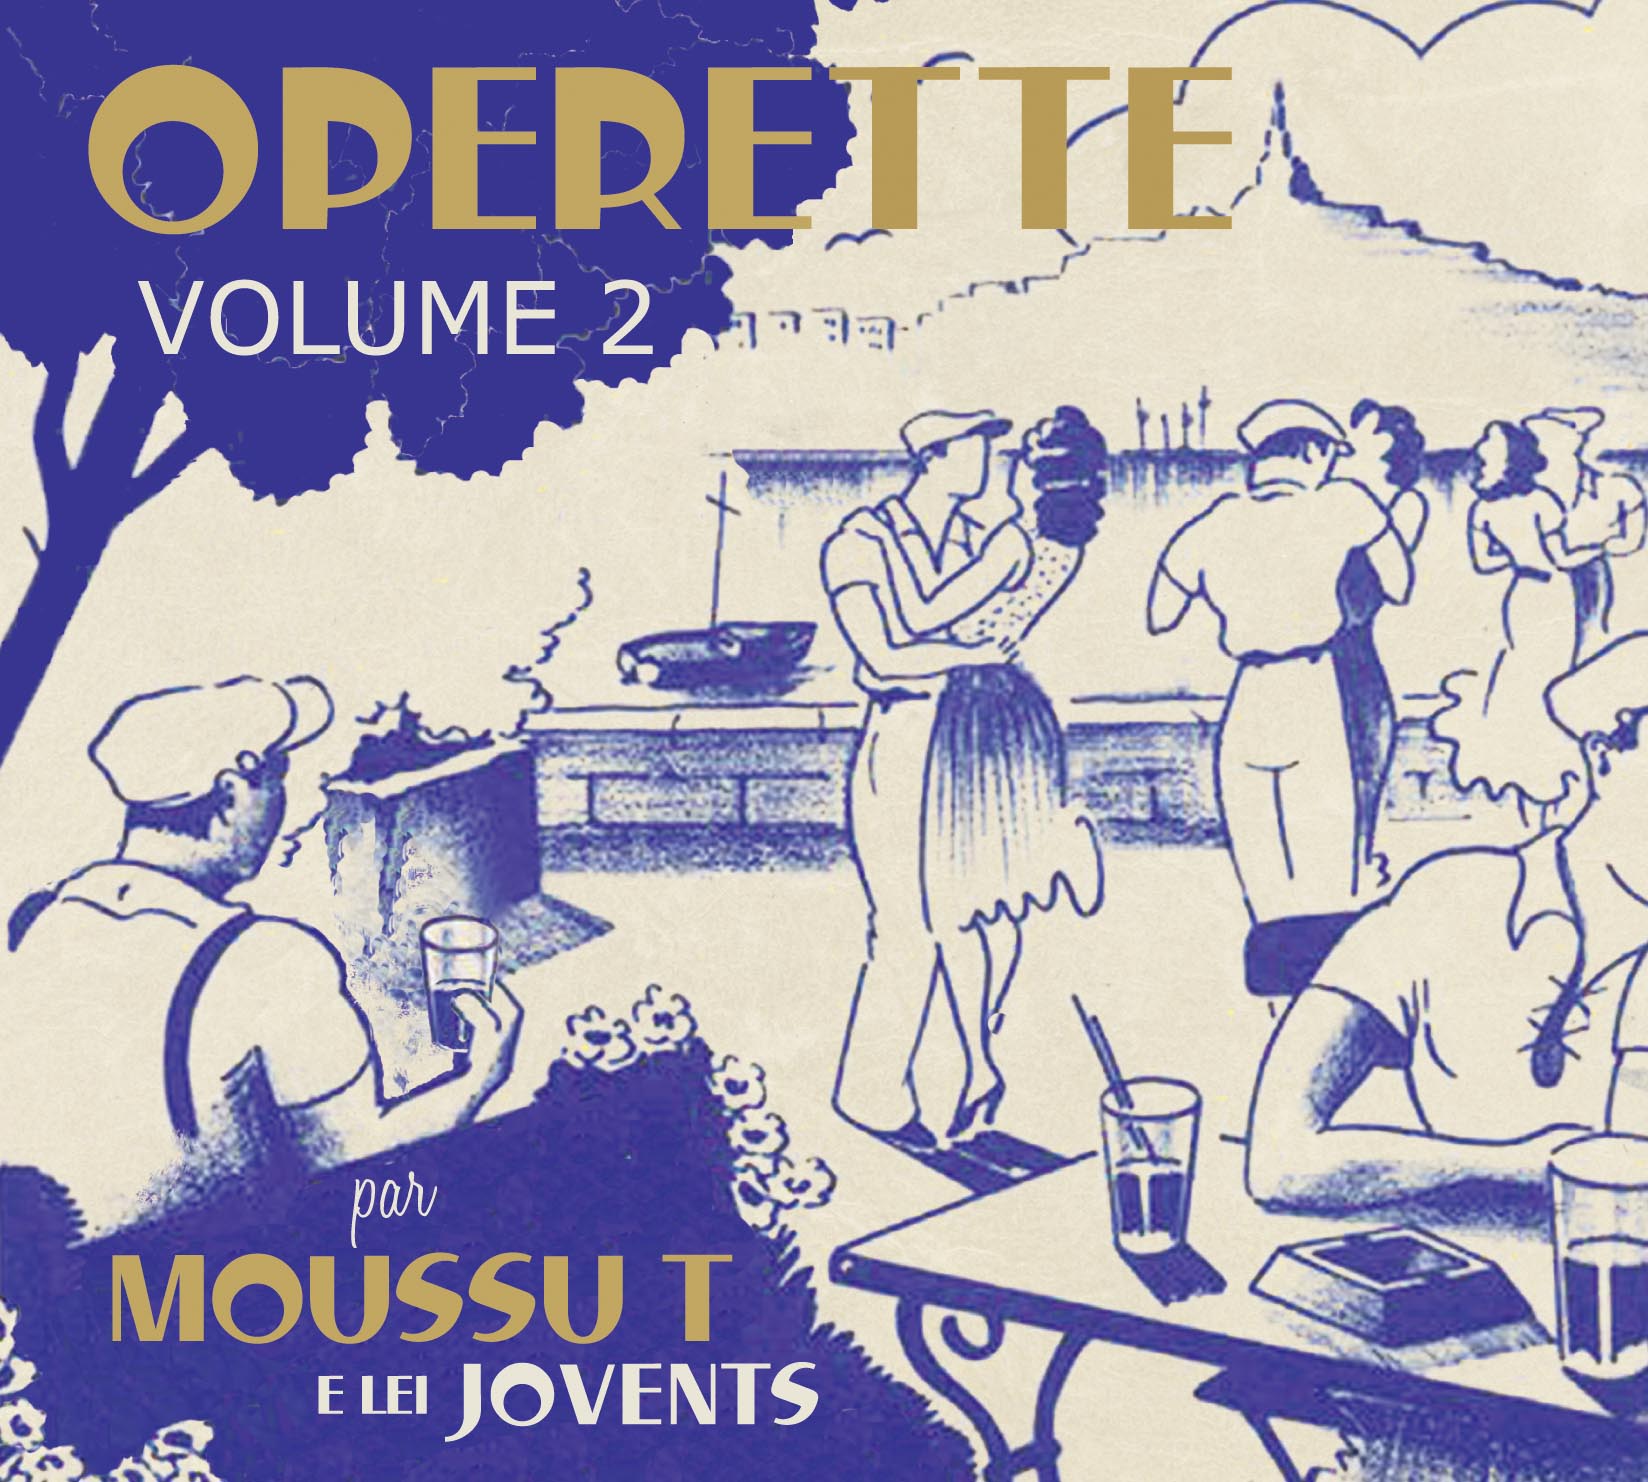 Operette Volume 2